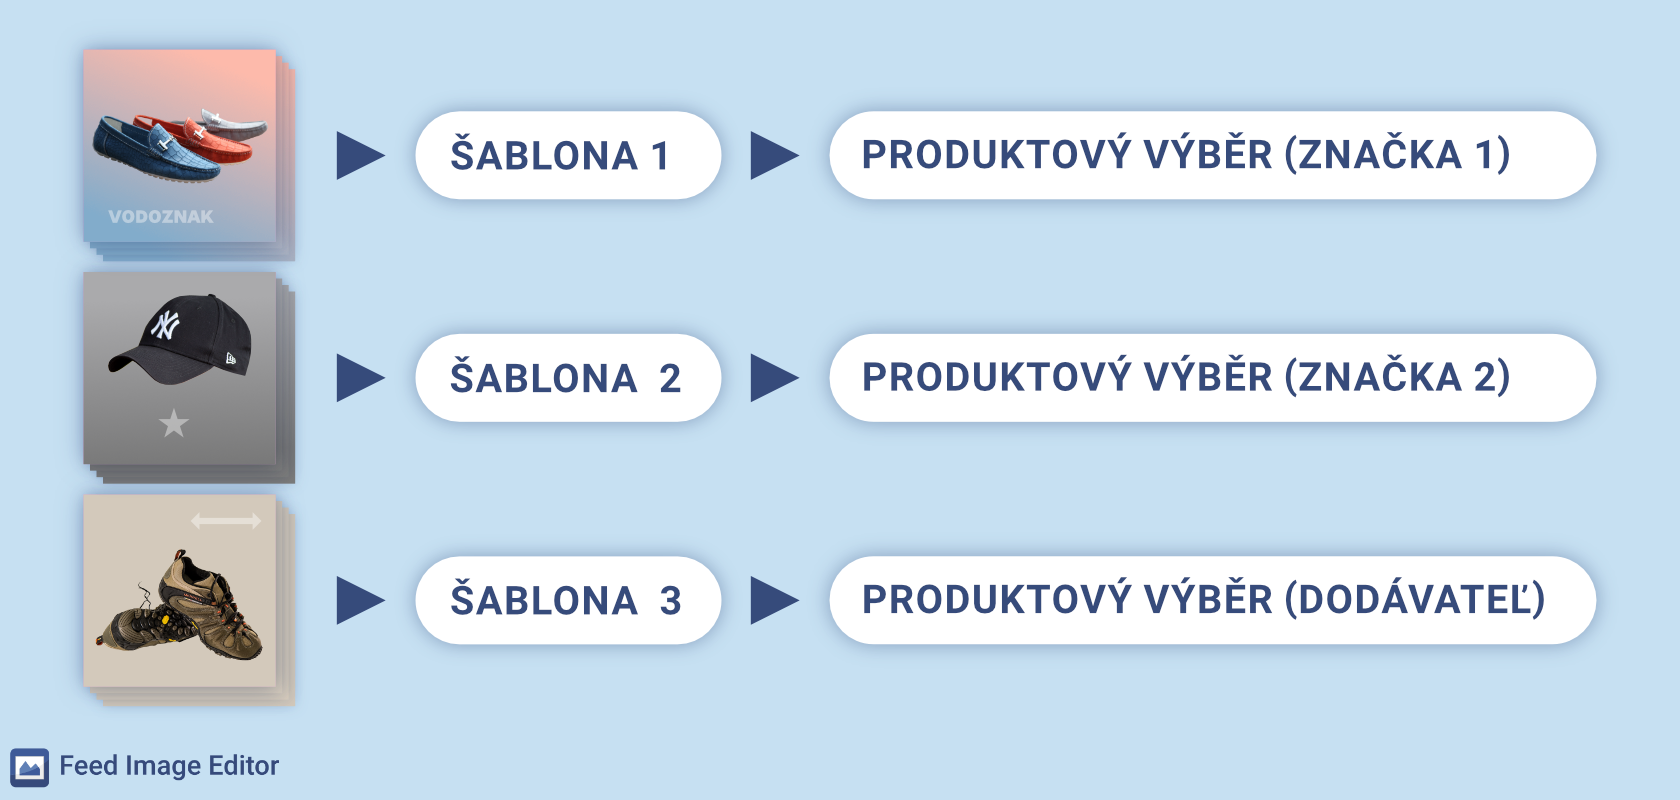 produktovy_vyber_sablona_vodoznaky_odstranit